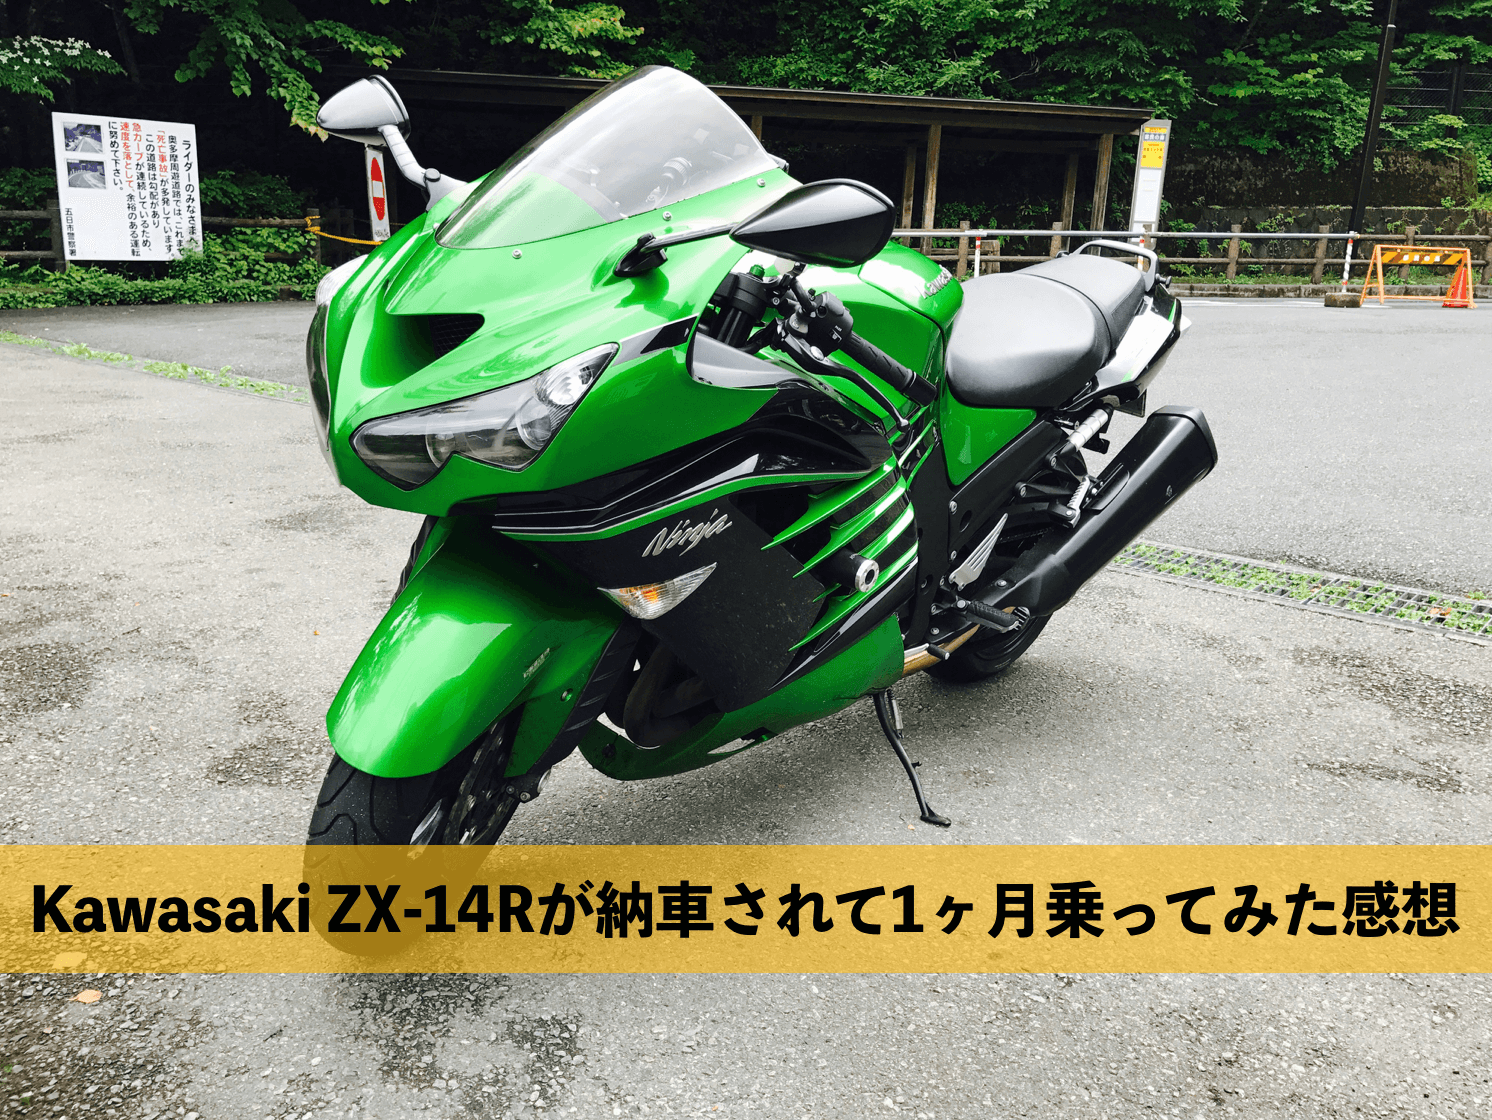 Kawasaki Zx 14rが納車されて1ヶ月乗ったのでレビューします バイク乗ろうぜ